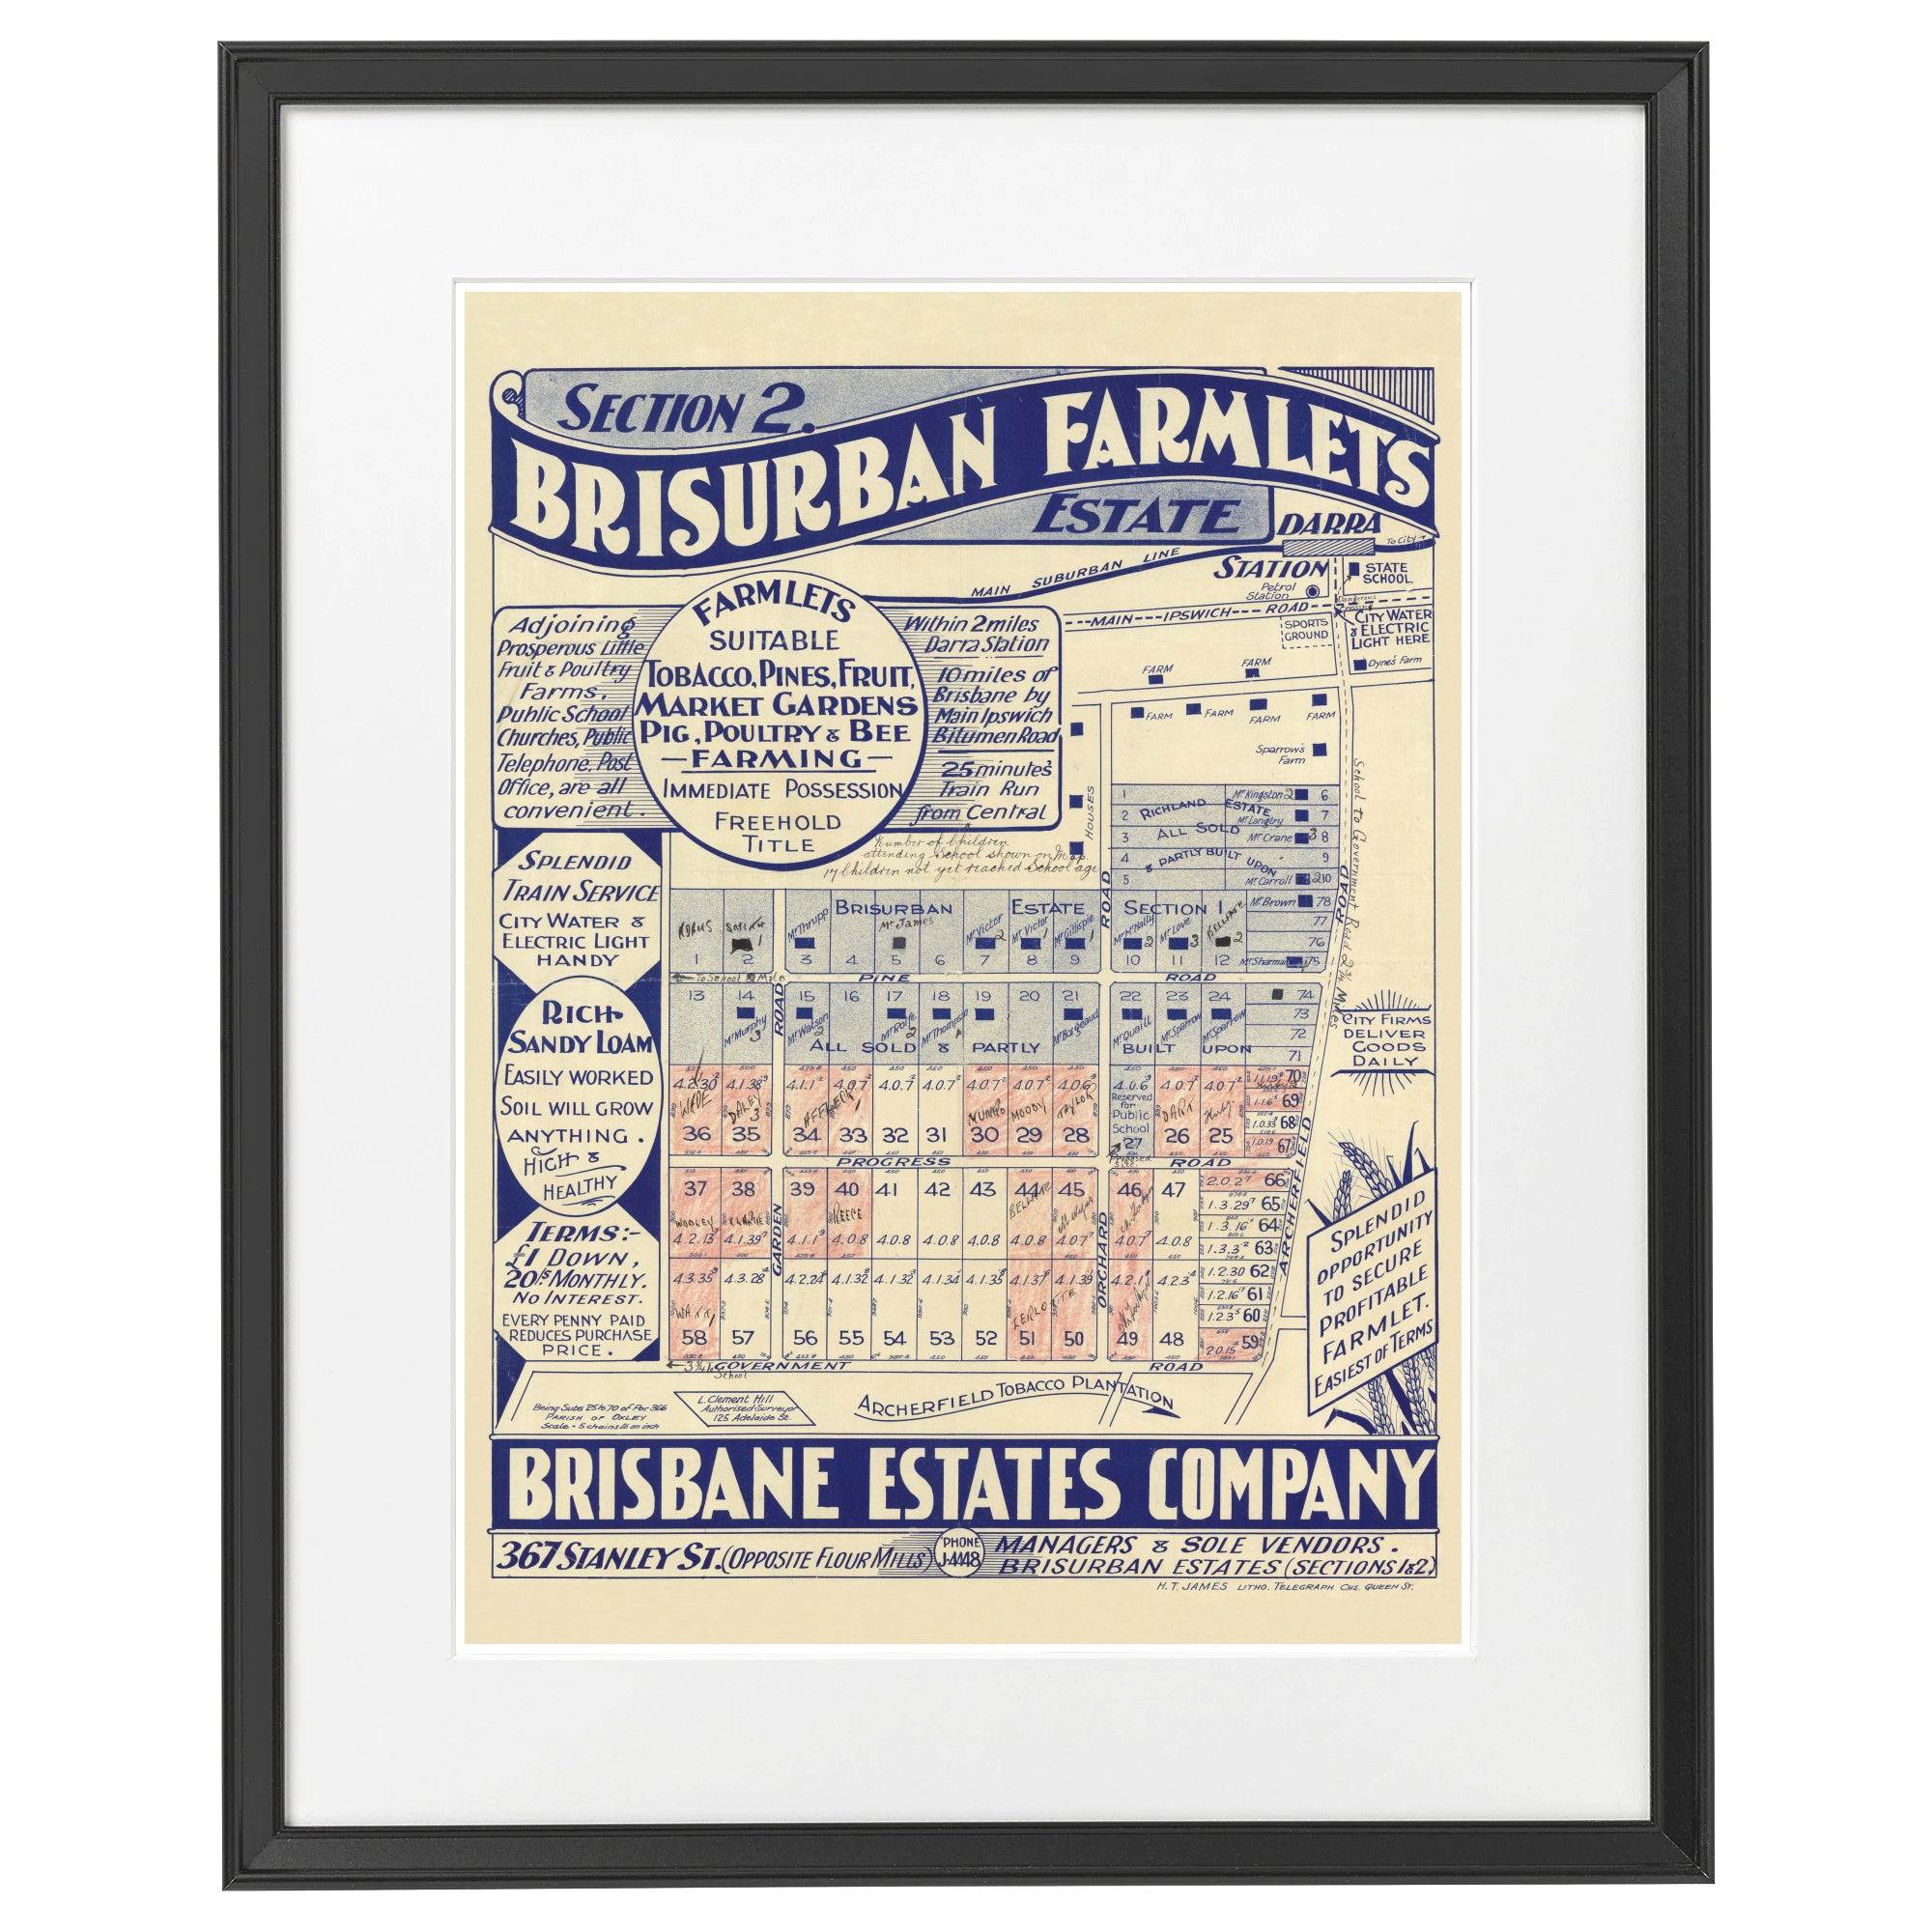 1931 Brisurban Farmlets Estate - Section 2 - 92 years ago today